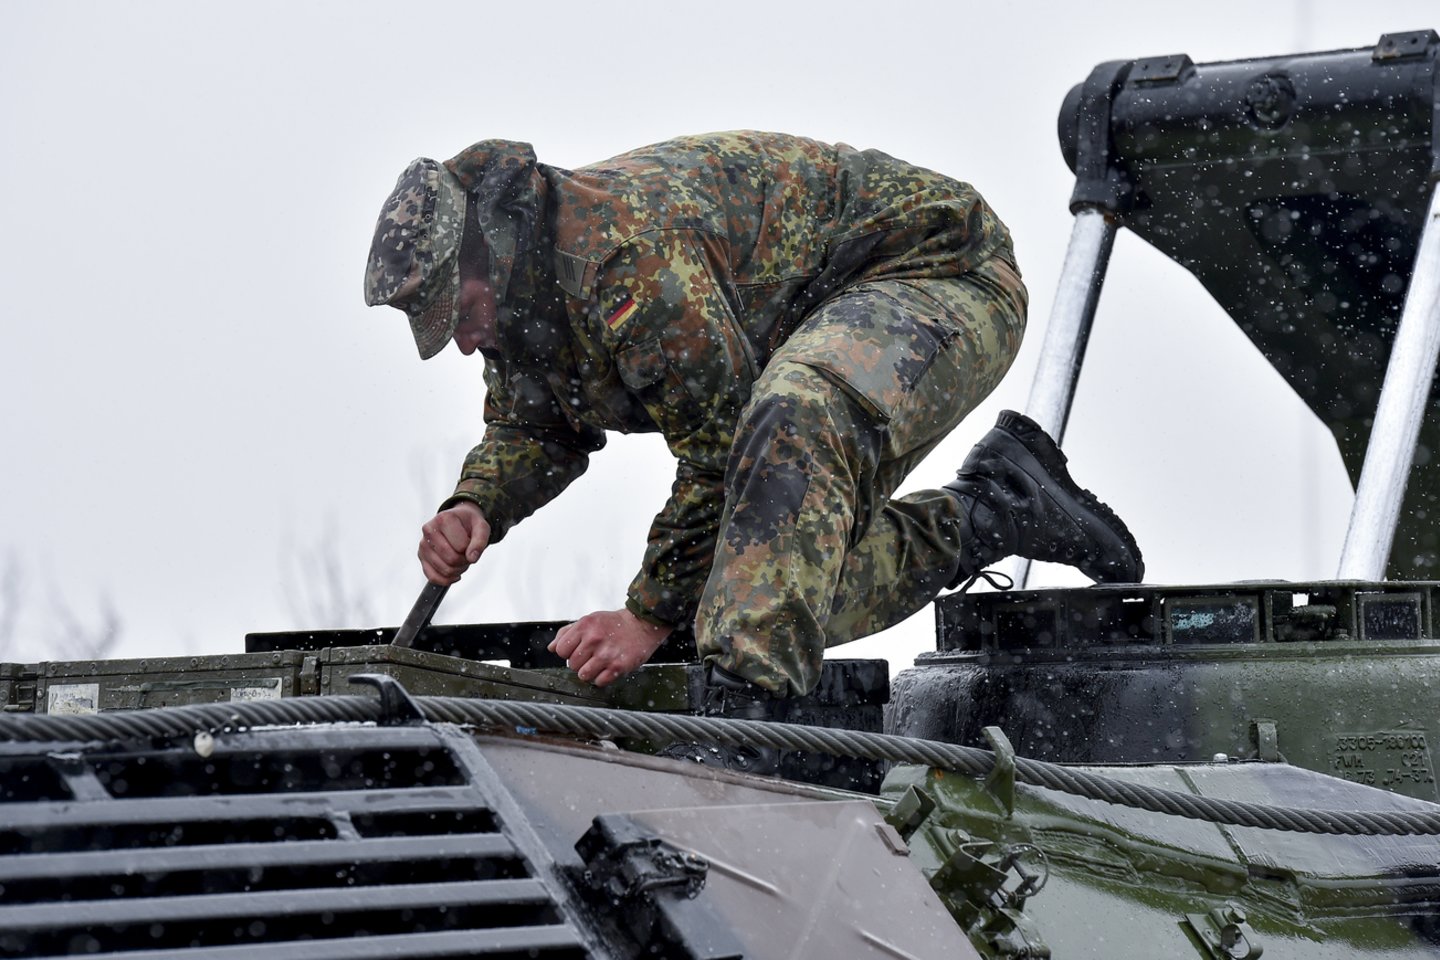 NATO karinė technika iš Vokietijos,Šeštokų gel.stotyje<br>V.Ščiavinsko asociatyvi nuotr.